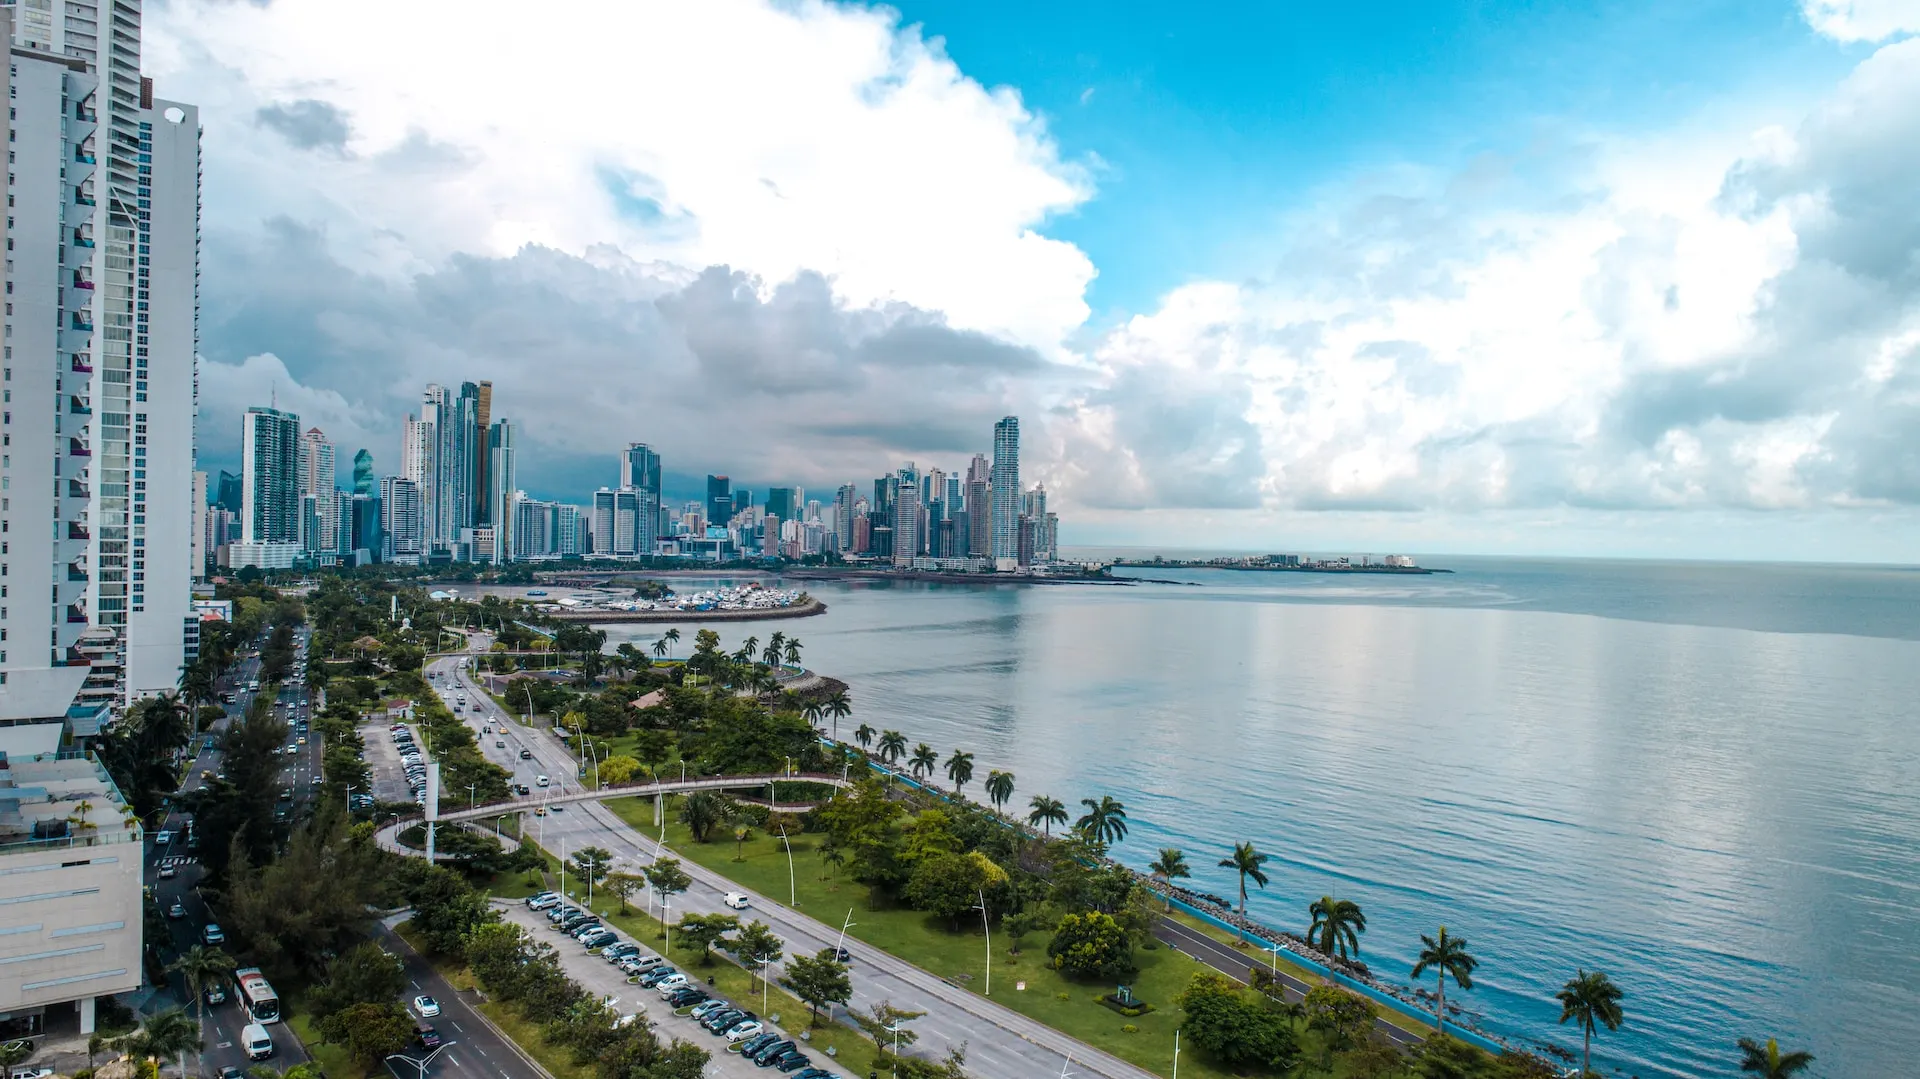 Cityscape of Panama City. Source: Photo by Luis Aleman on Unsplash